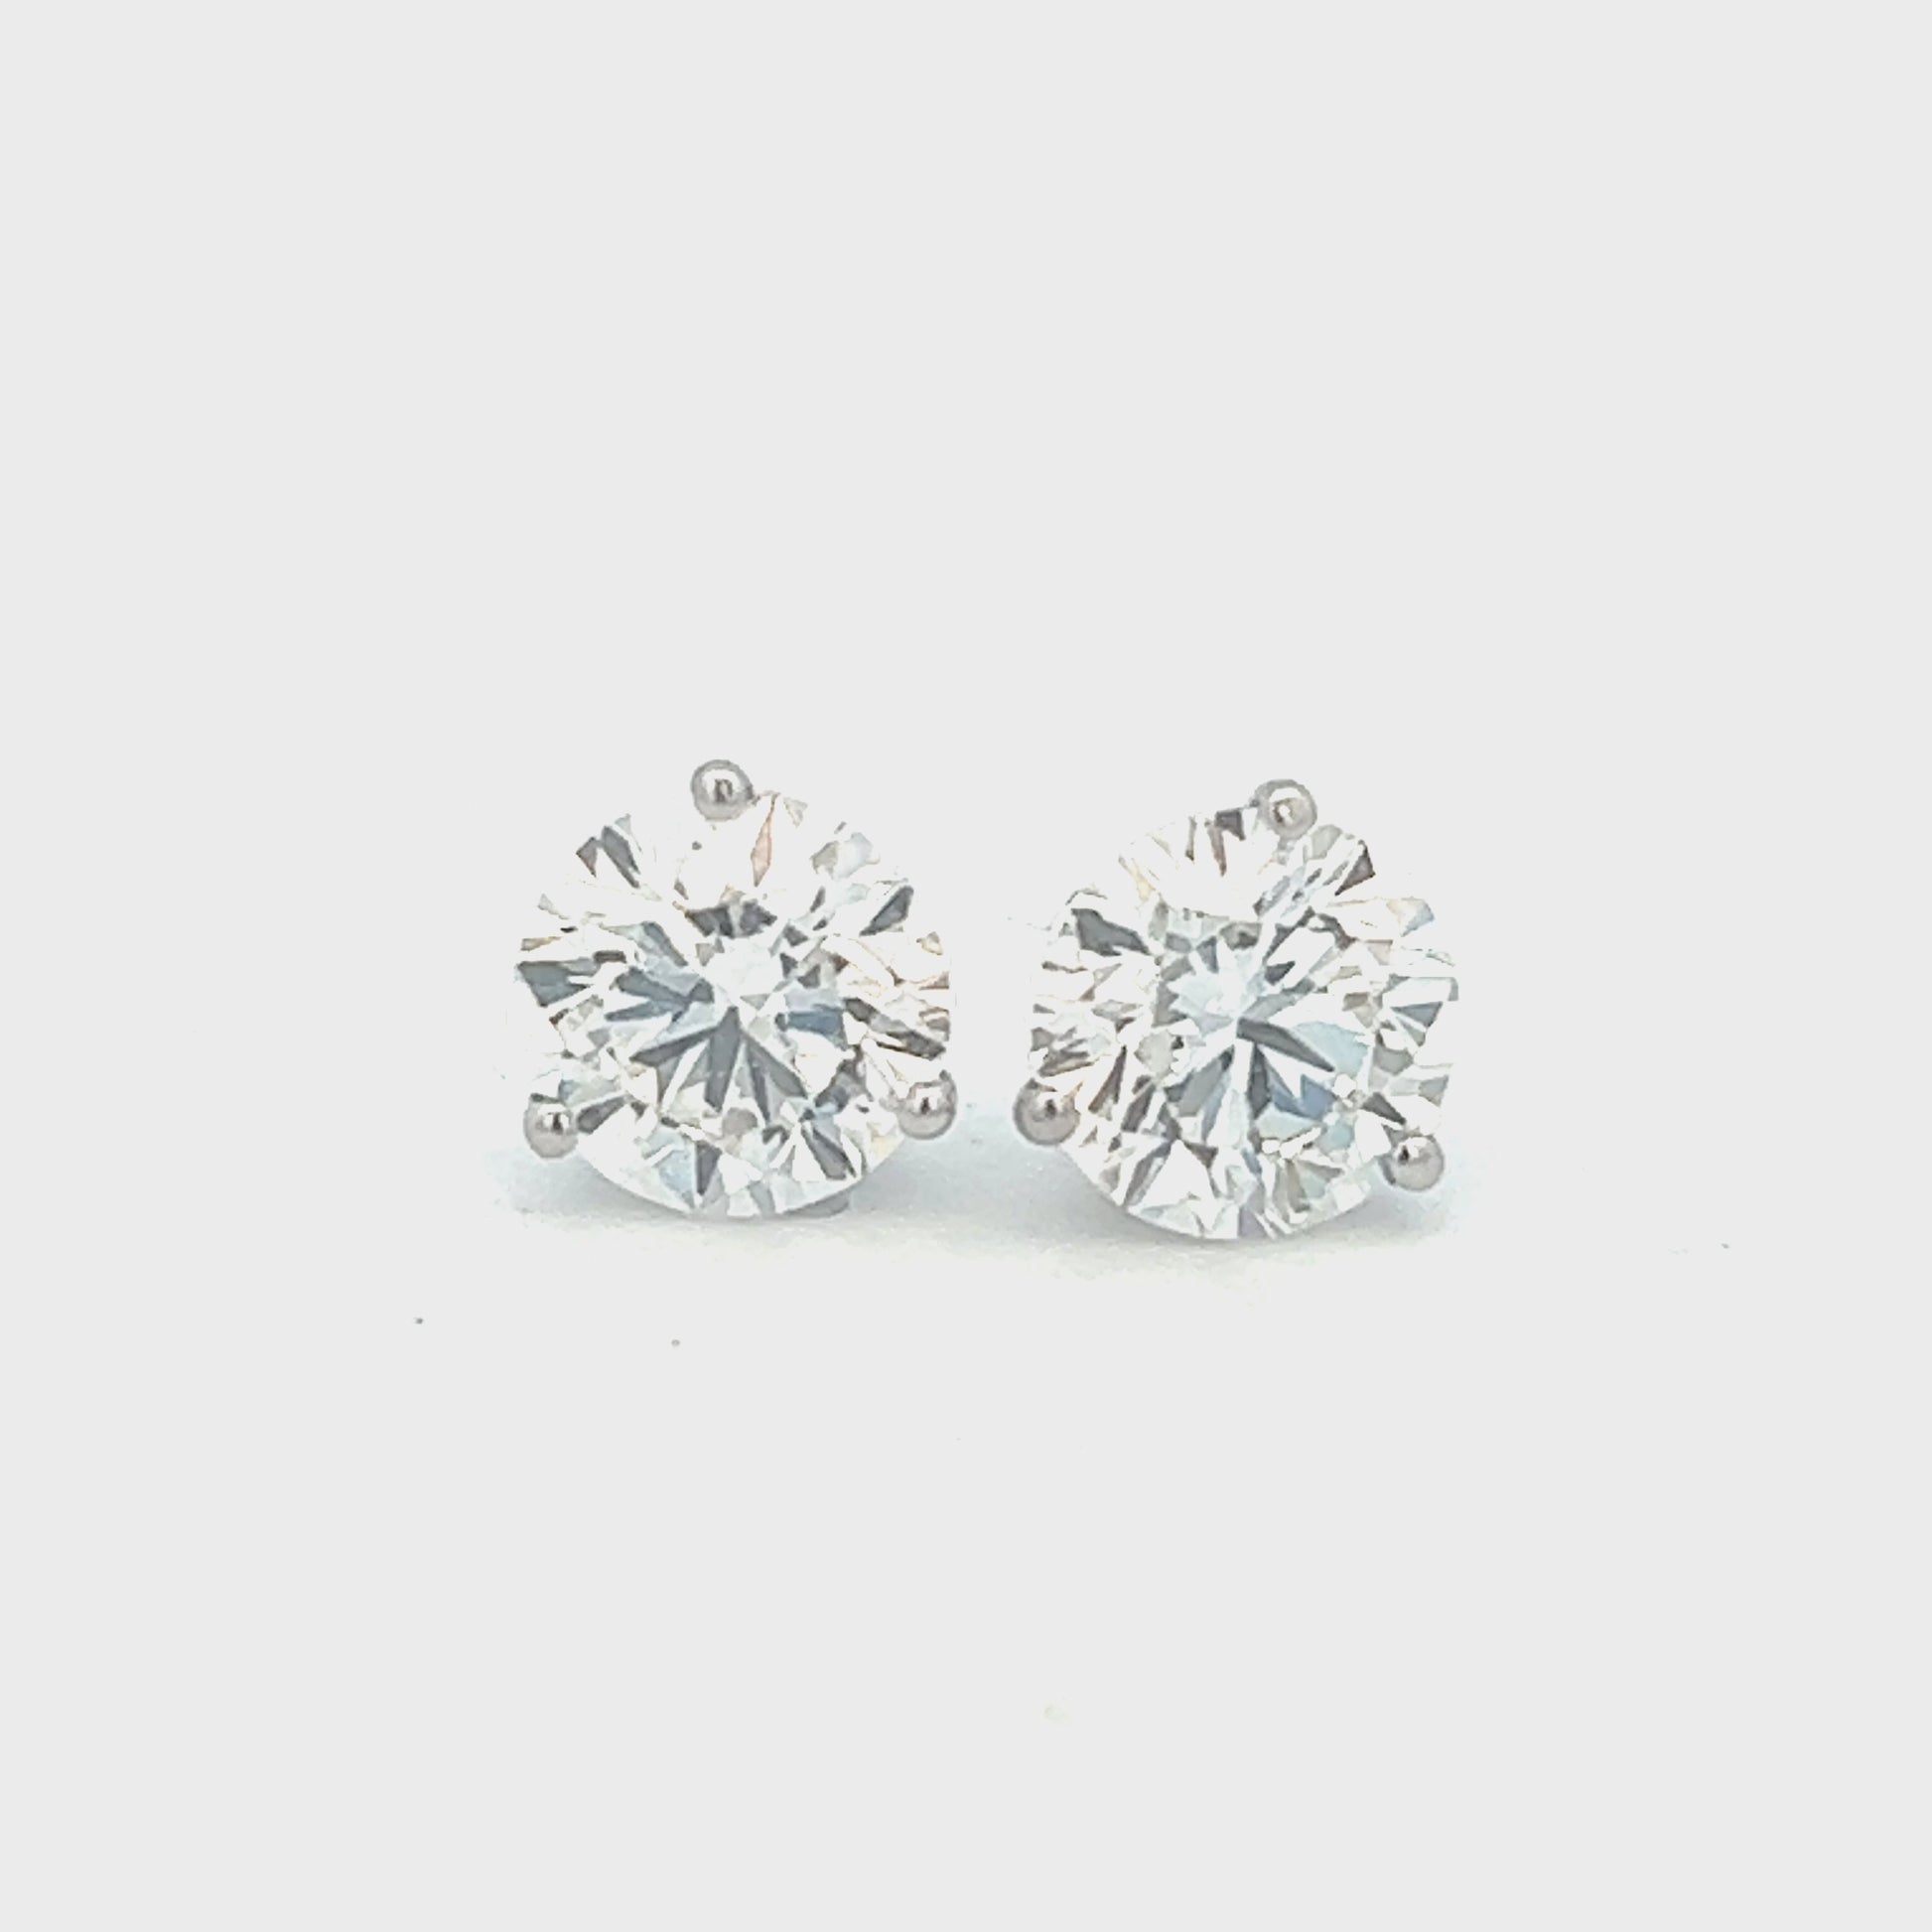 Captivating 5 Carat Diamond Earrings | IGI Certified Diamond | Video